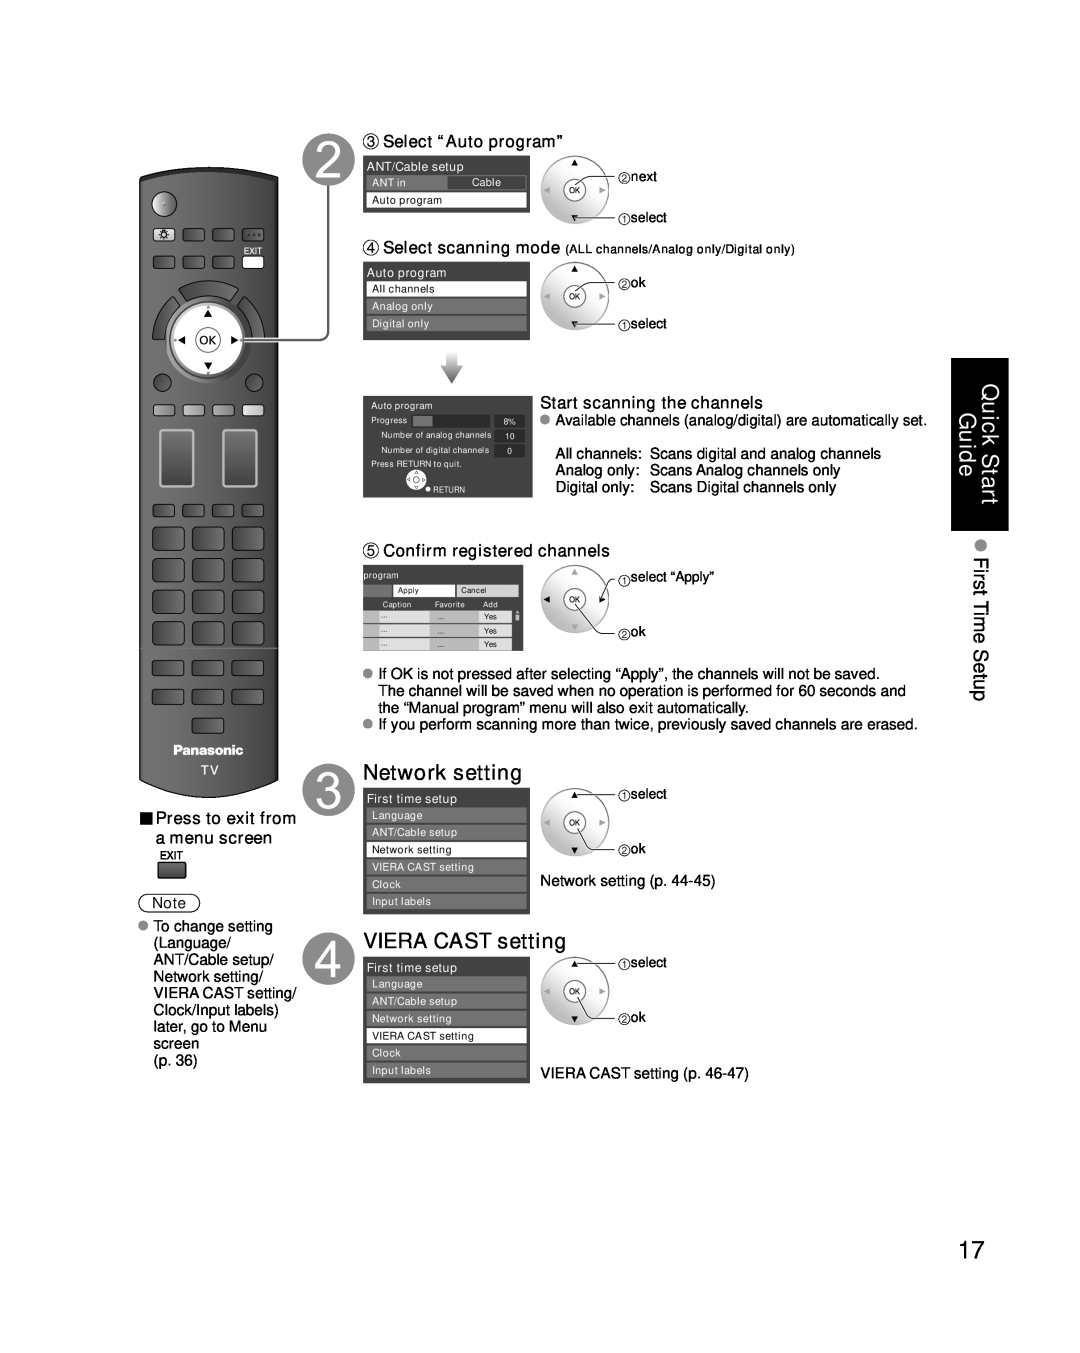 Panasonic TC-P54G10 QuickGuideStart First Time Setup, Network setting, VIERA CAST setting, Select “Auto program” 